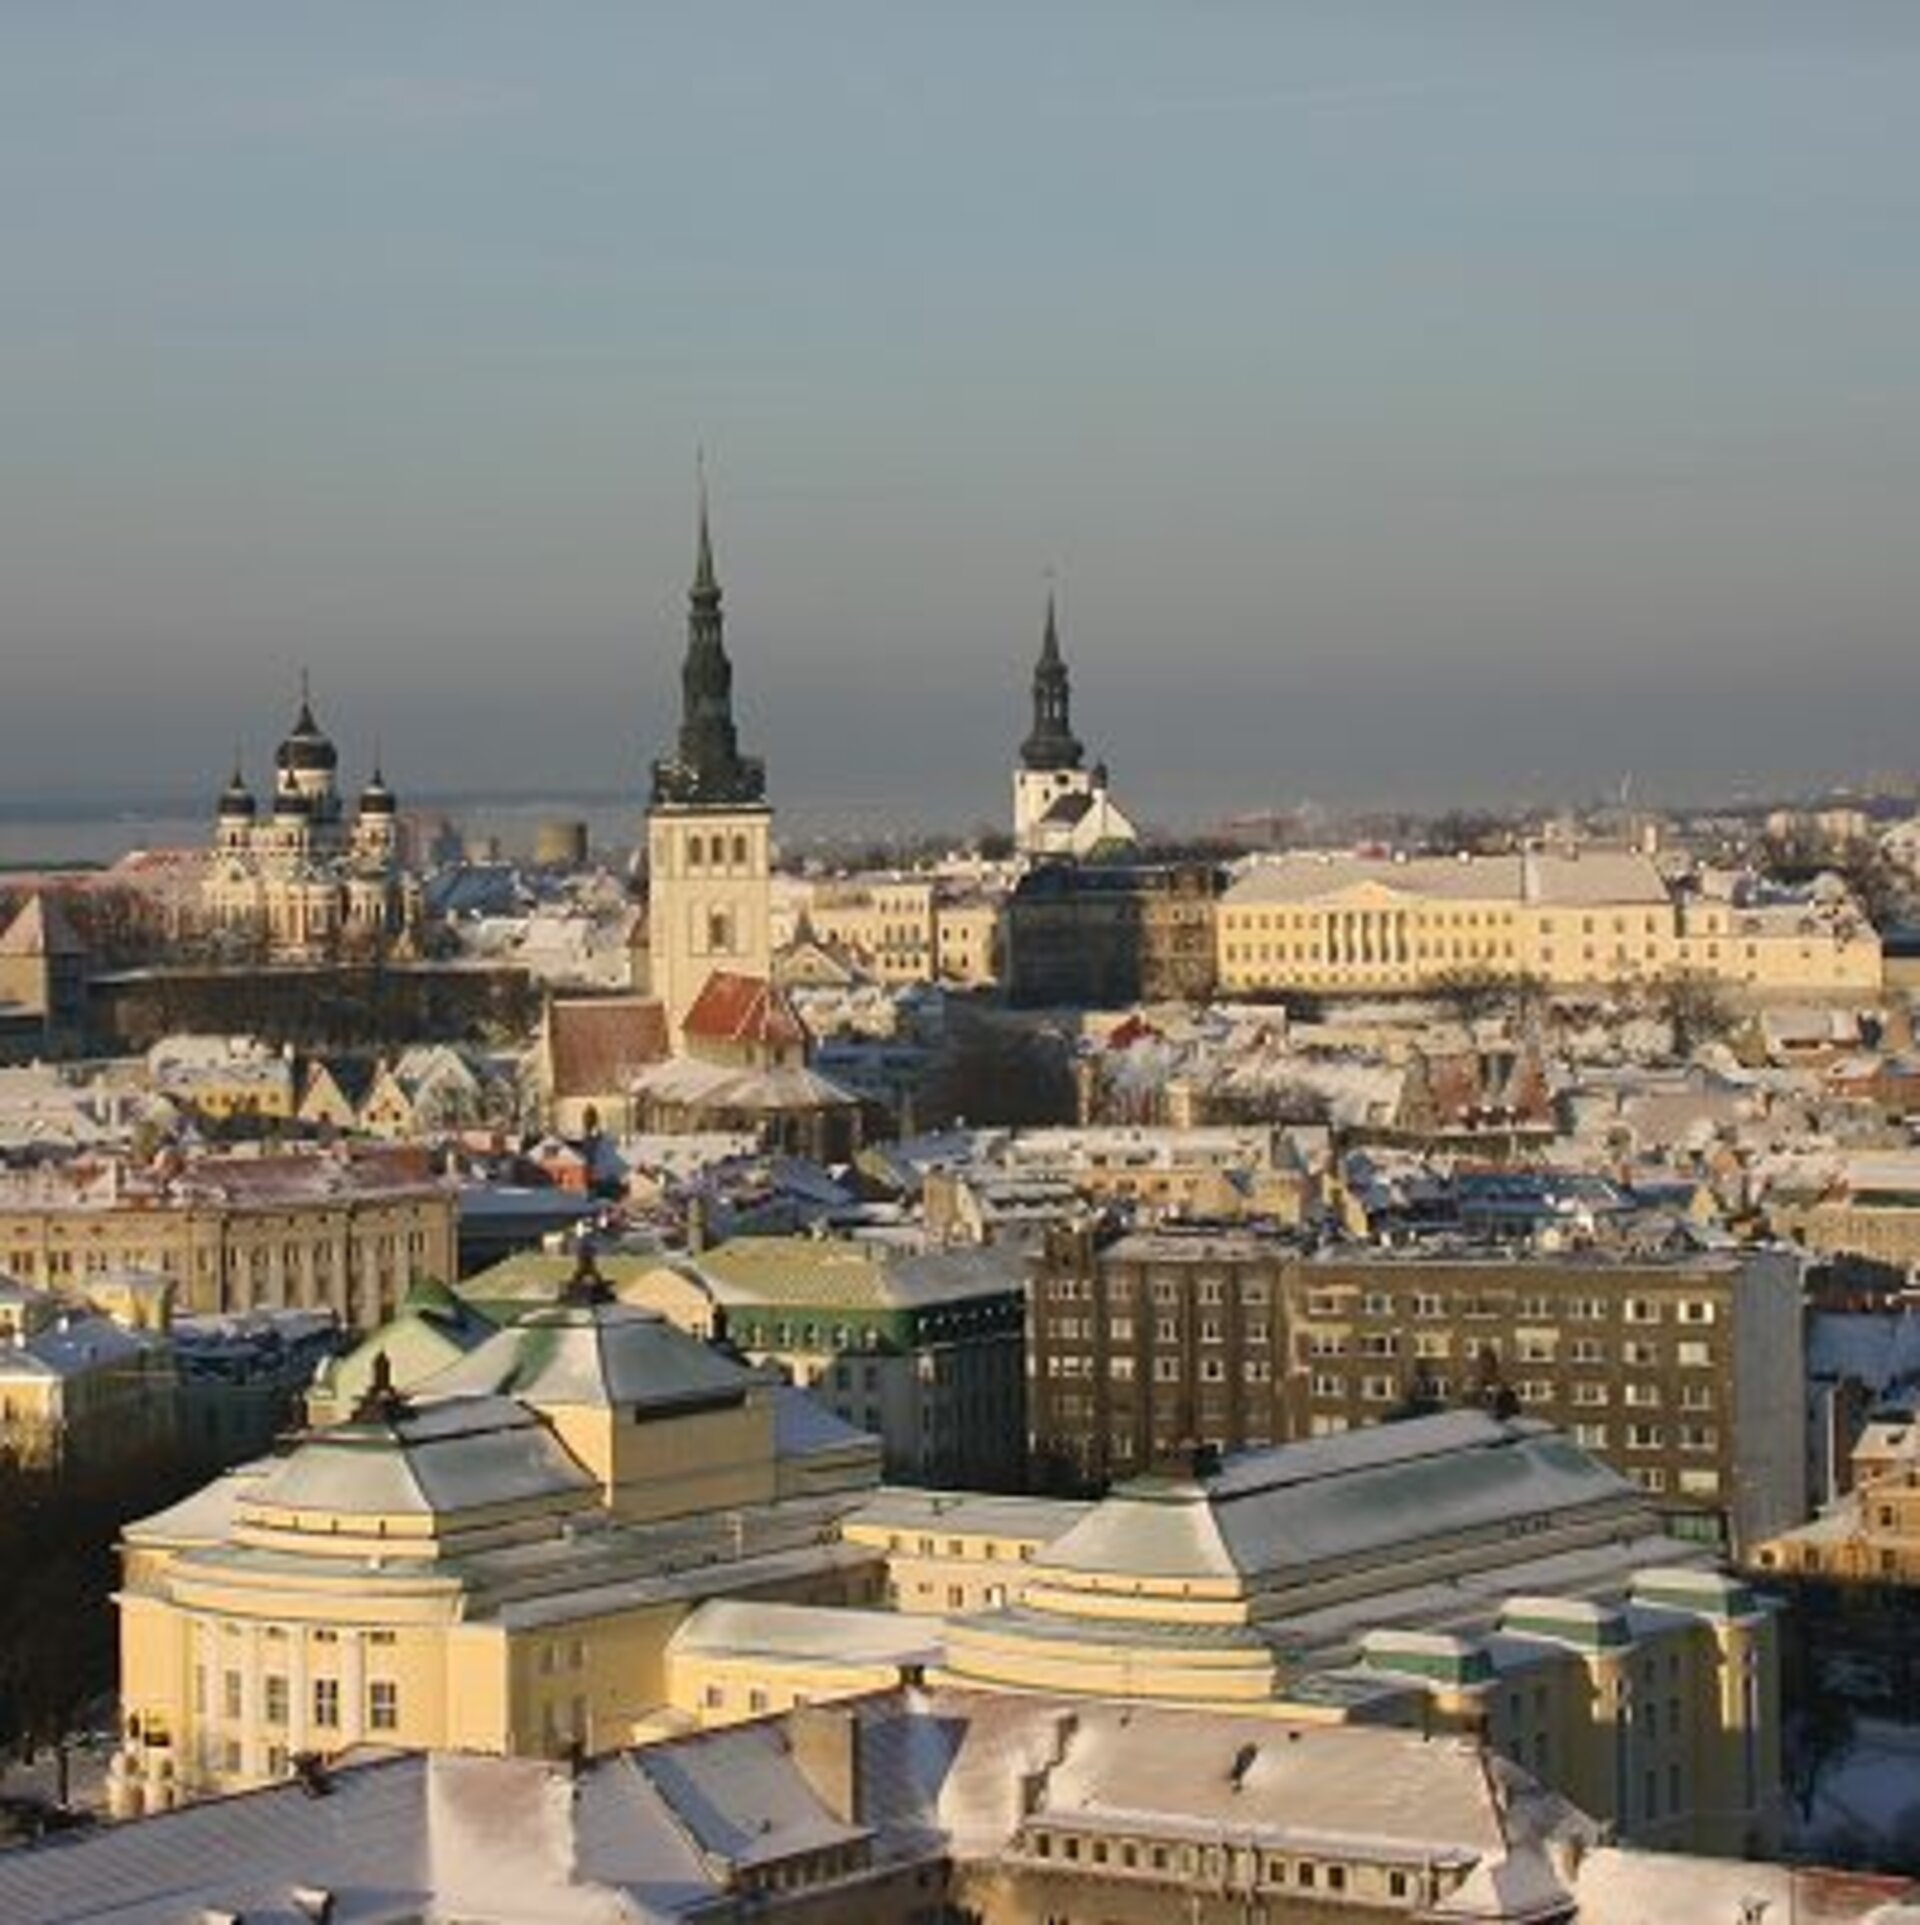 View of Tallinn